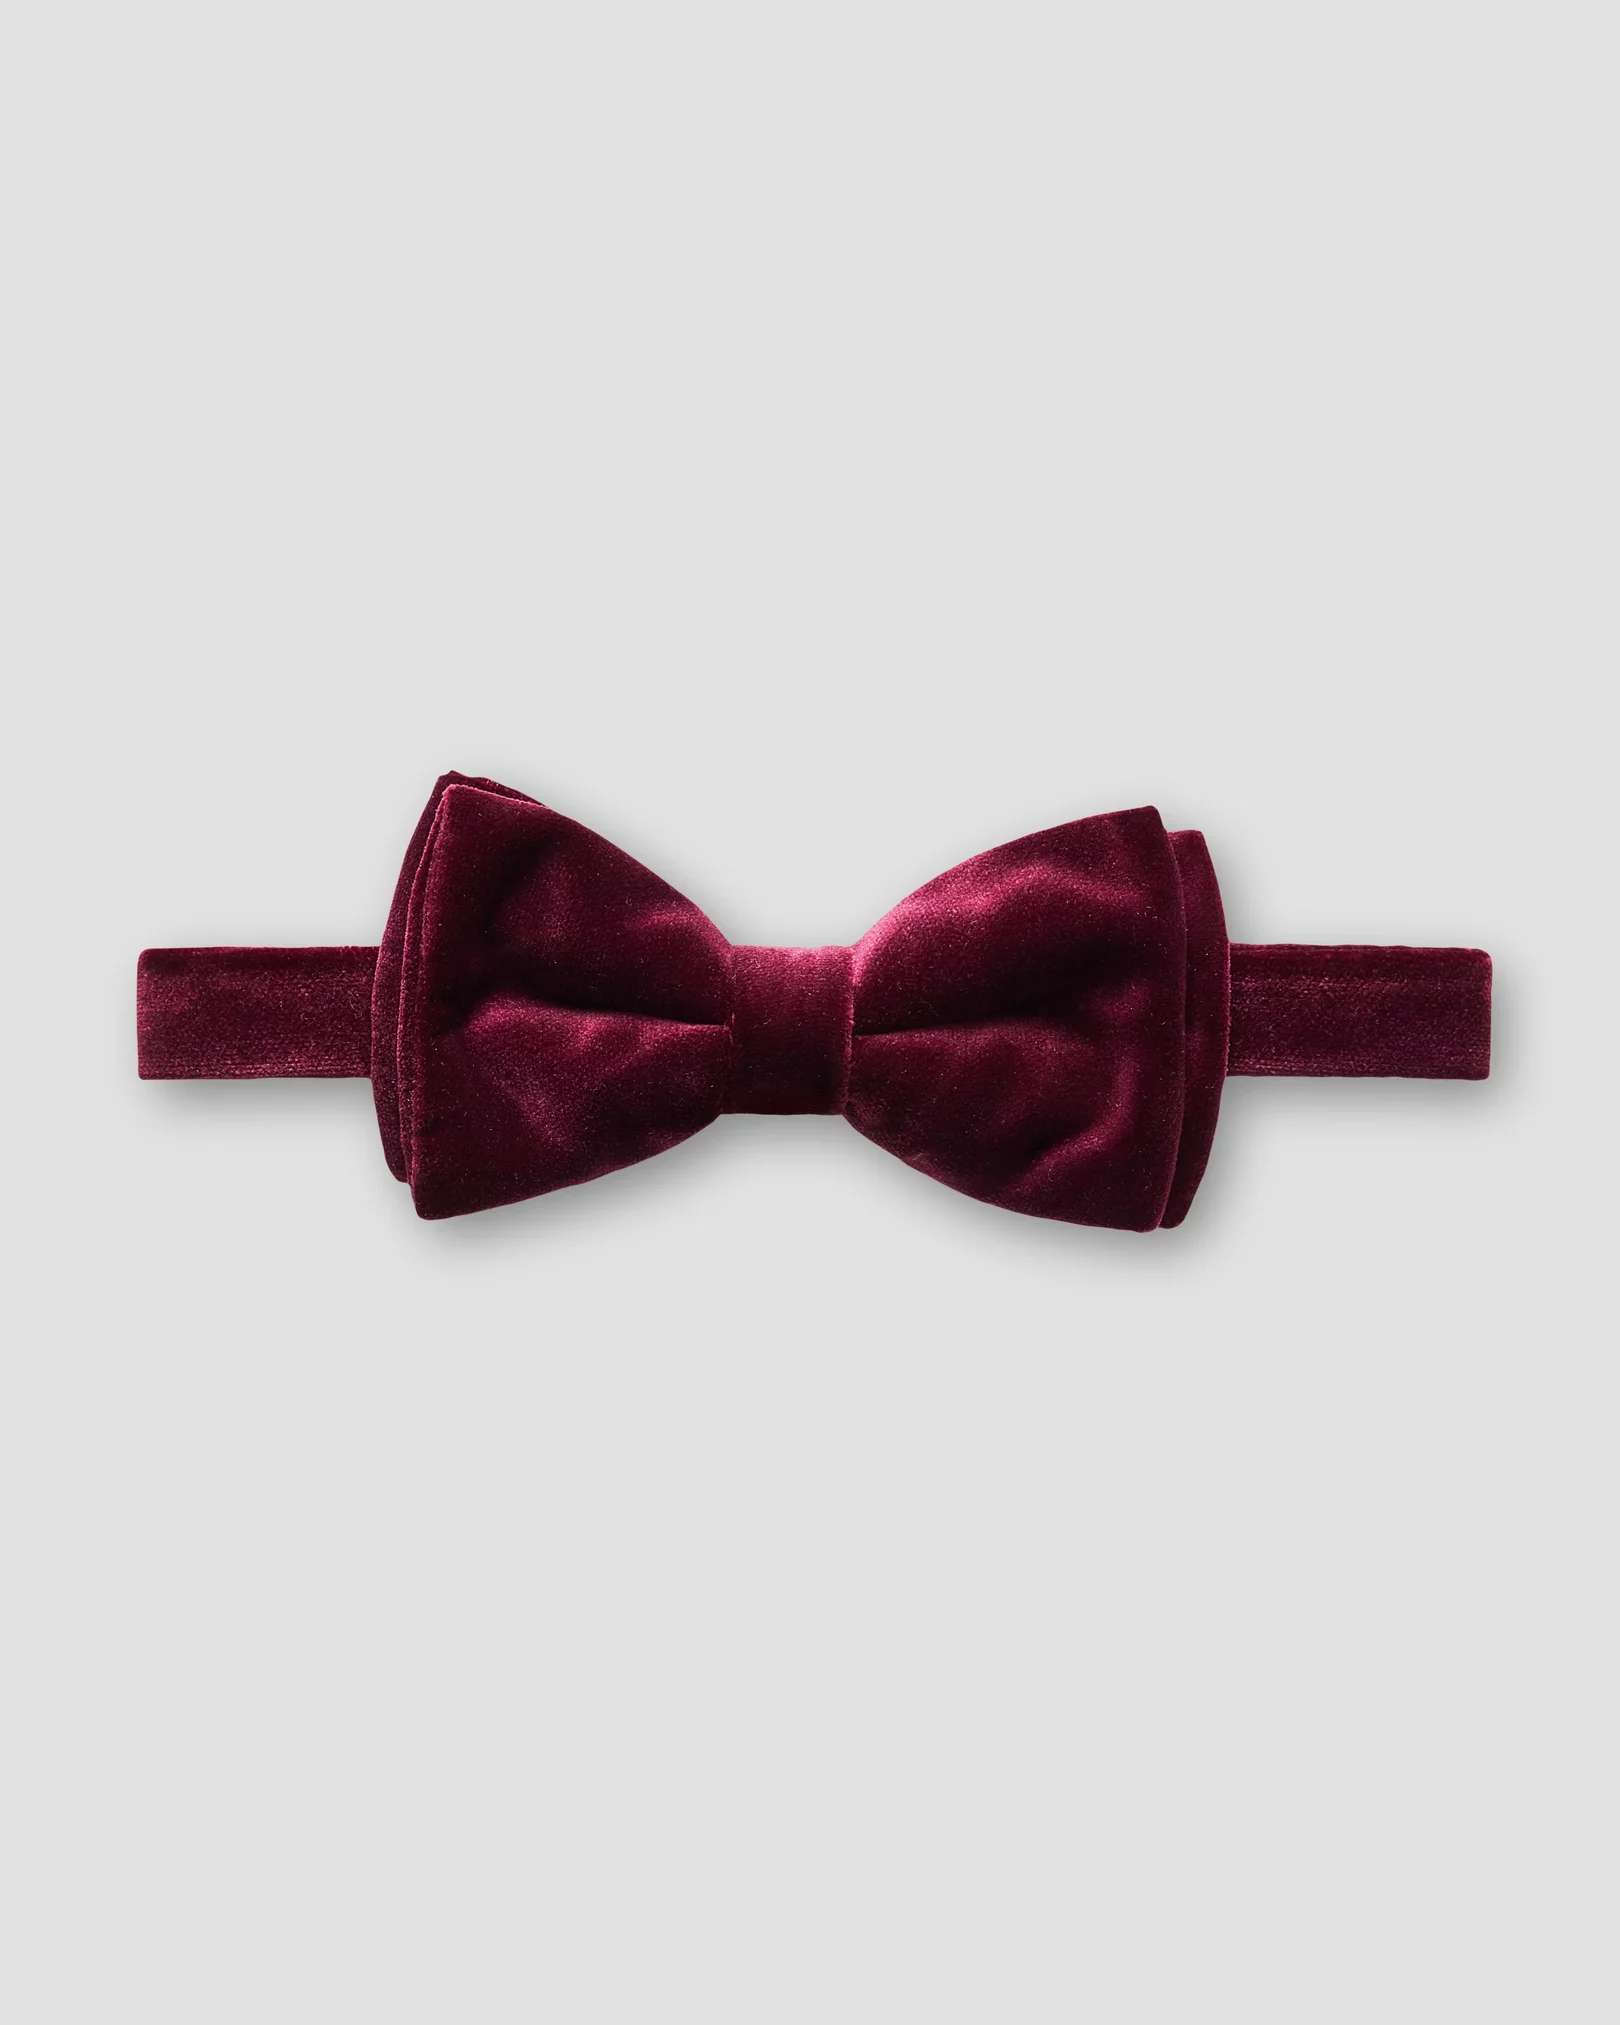 Eton - red velvet bow tie ready tied